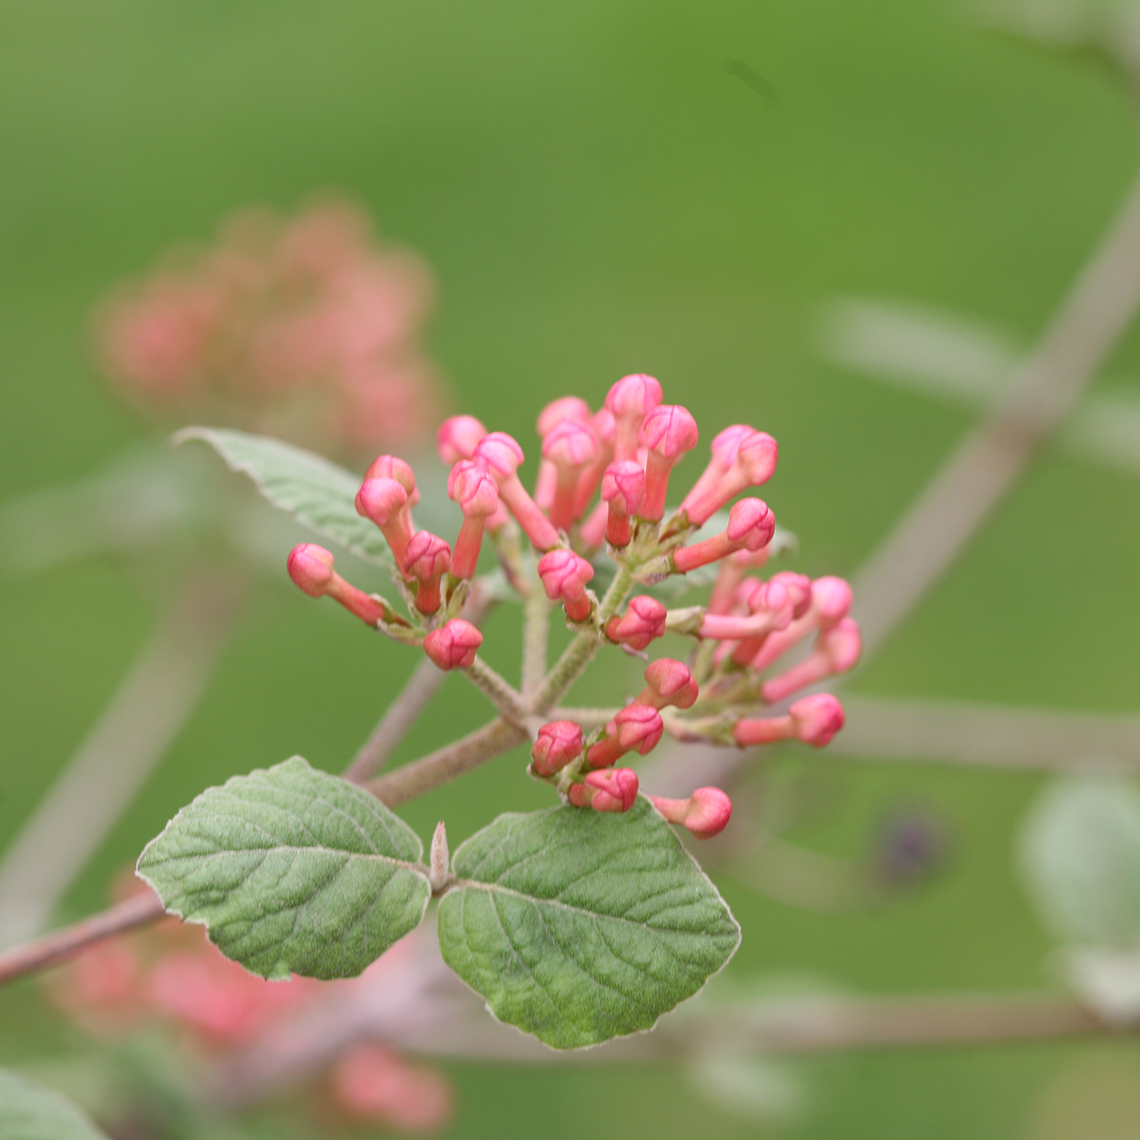 The deep pink flower buds of Spice Girl Koreanspice viburnum